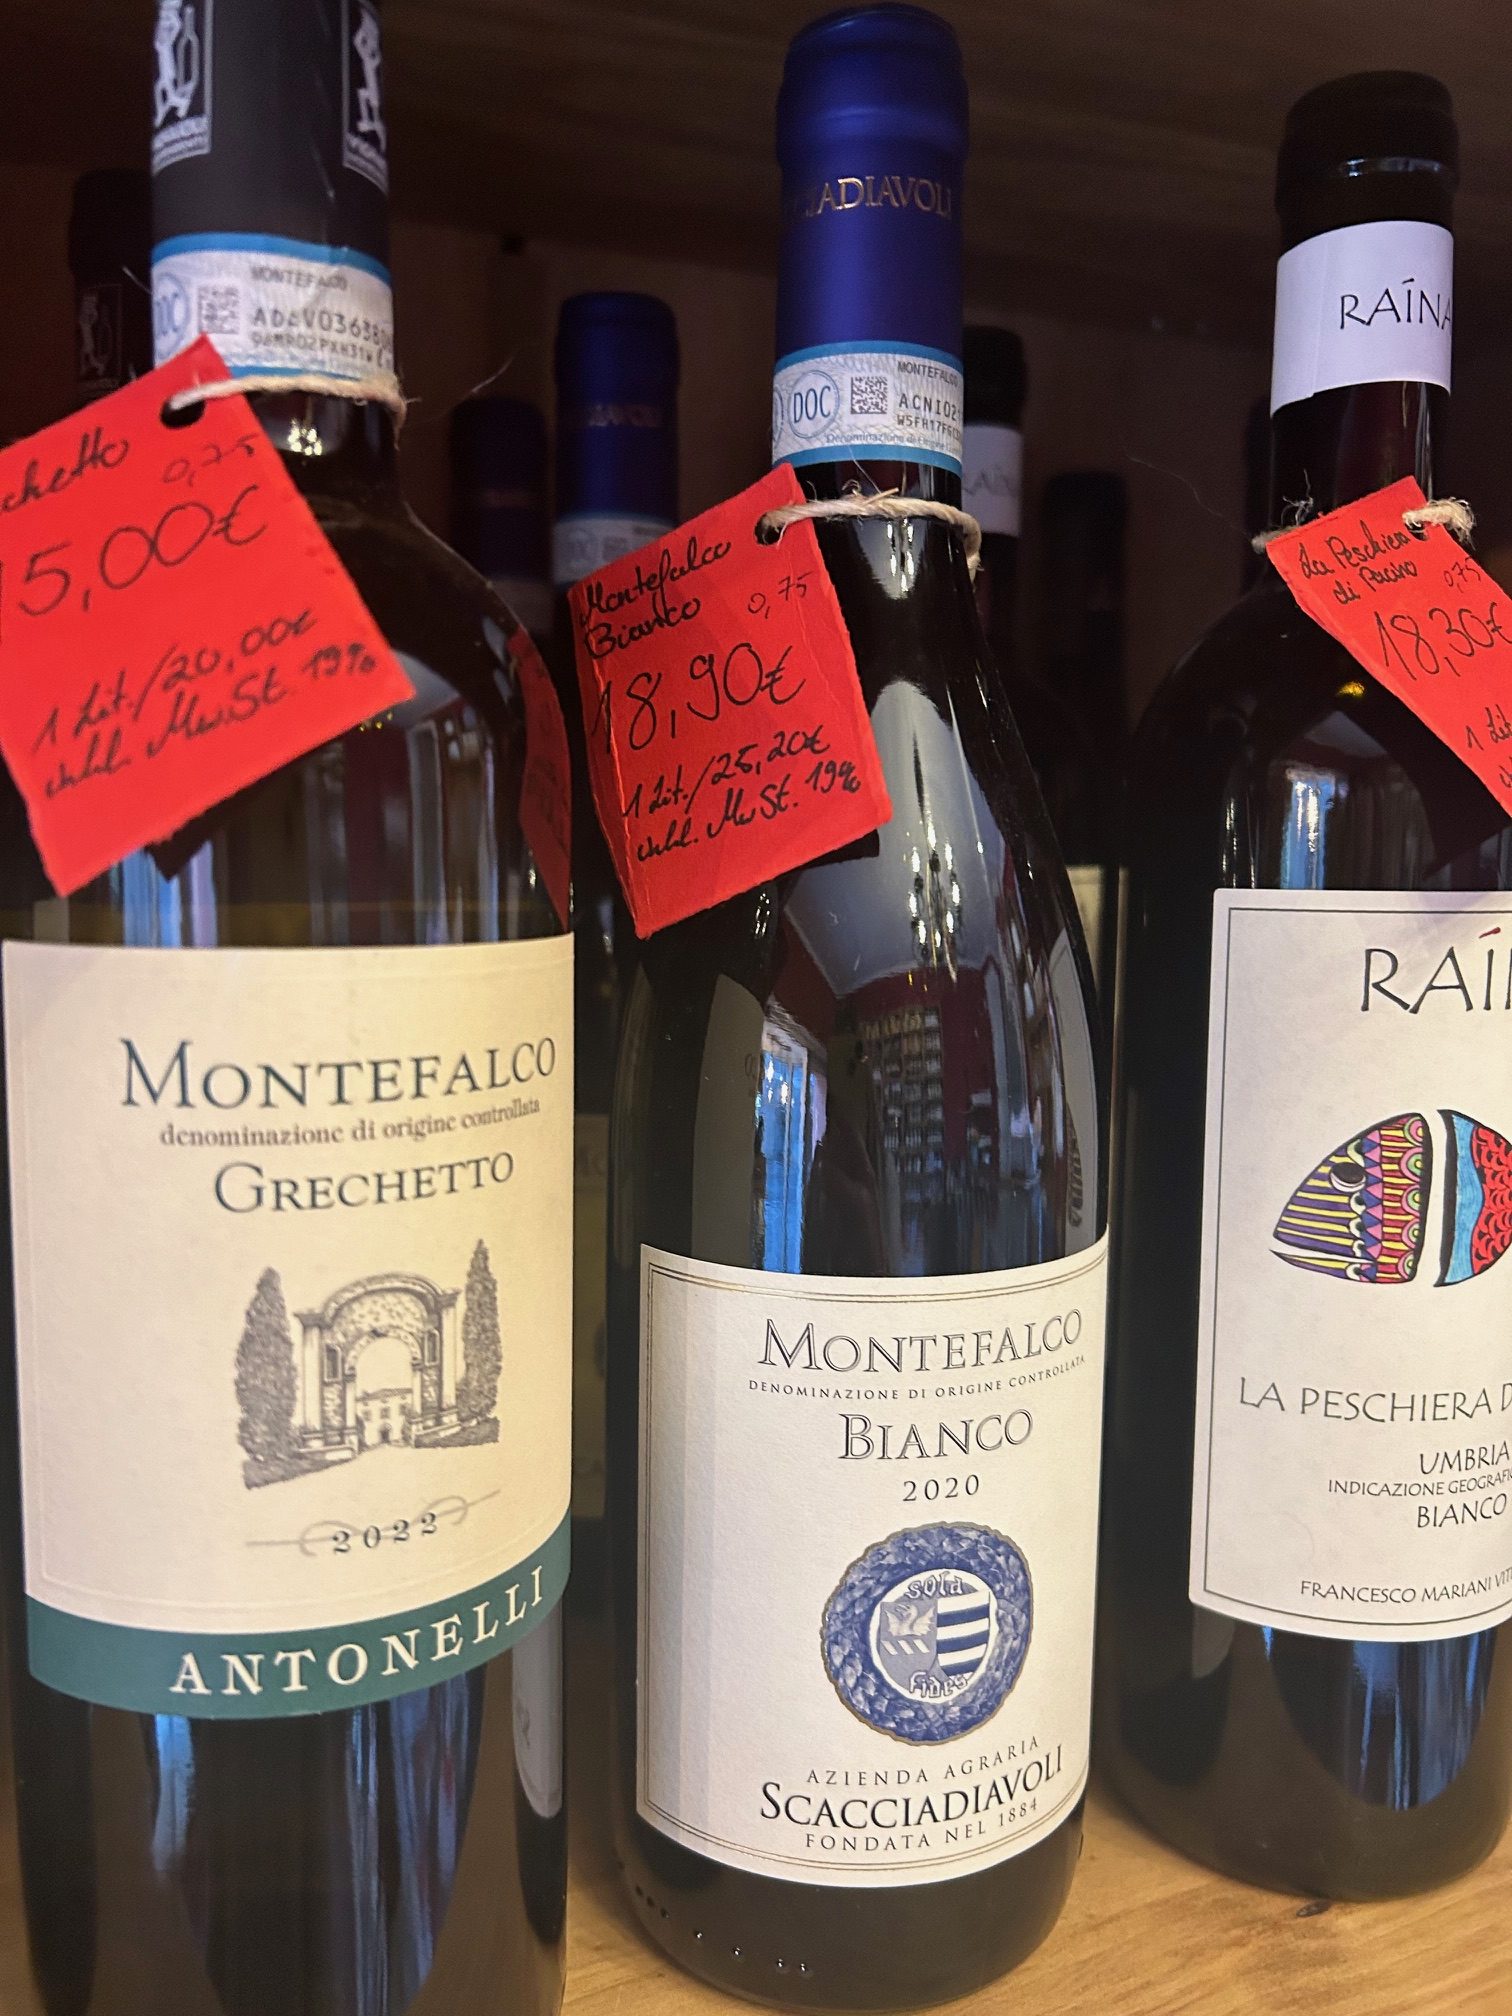 Eine große Auswahl an Weinen aus dem Anbaugebiet Montefalco